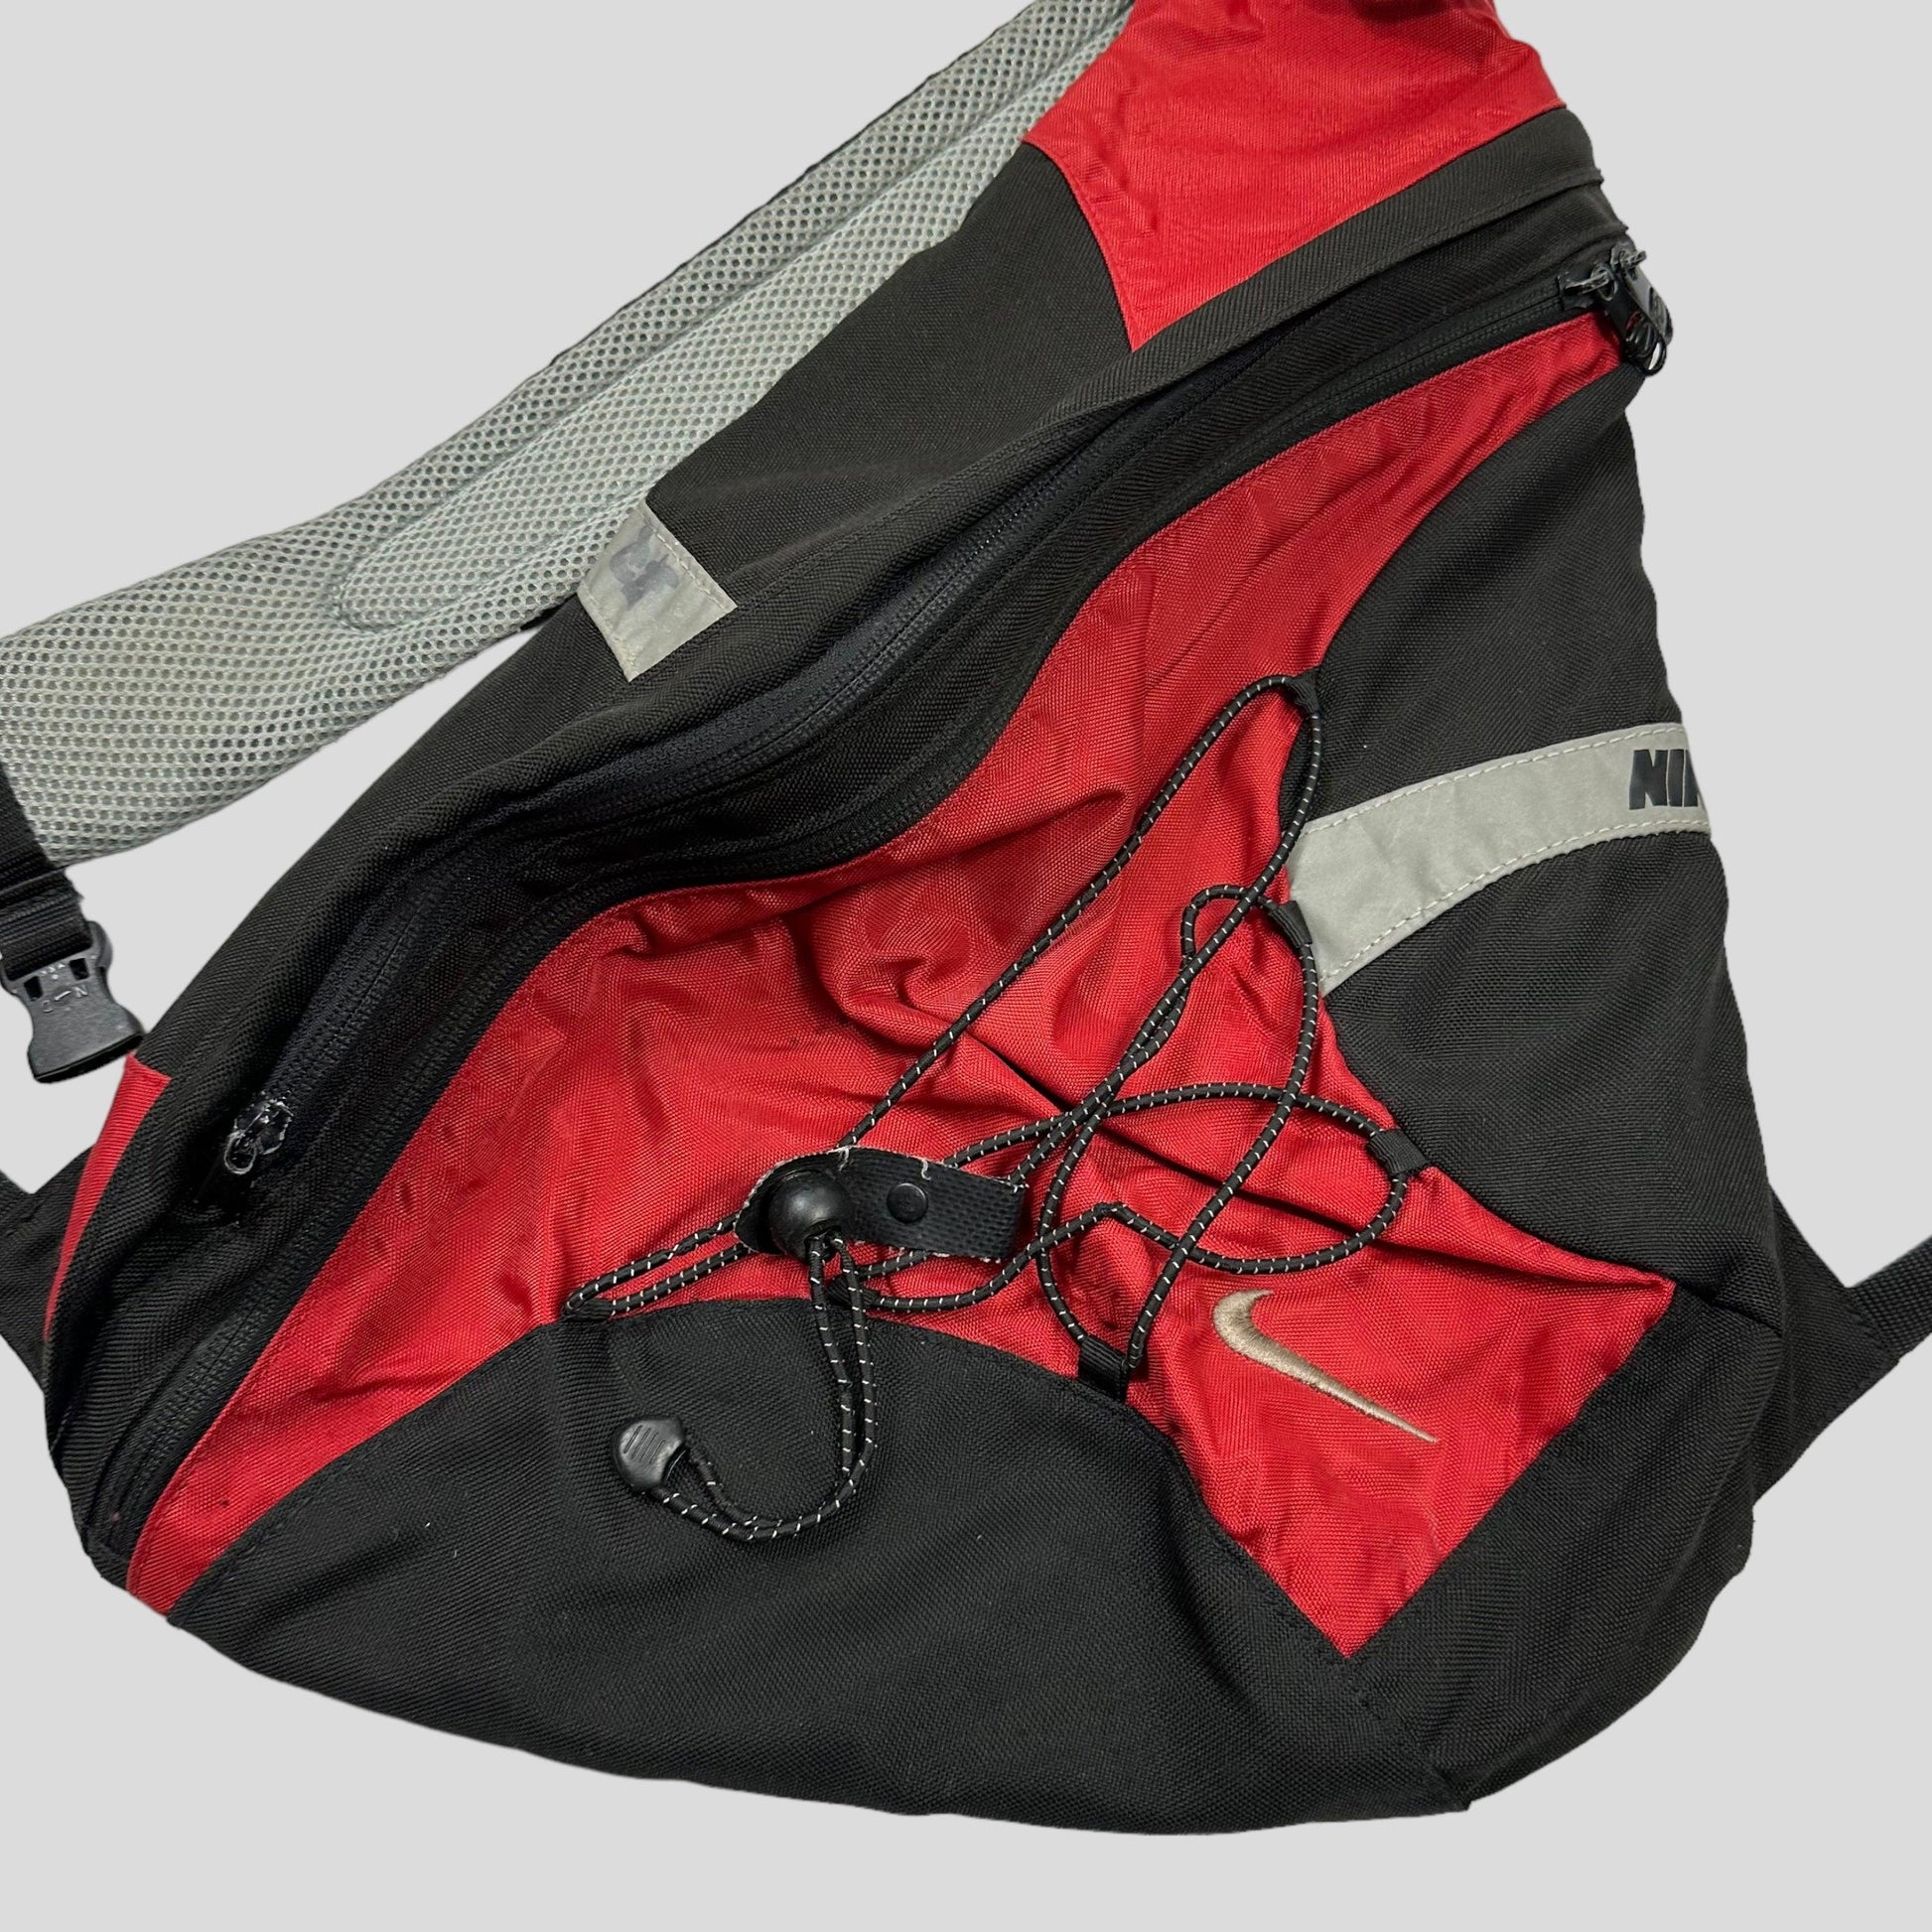 Nike 2006 Utility 3m Tri-harness Bag - Known Source